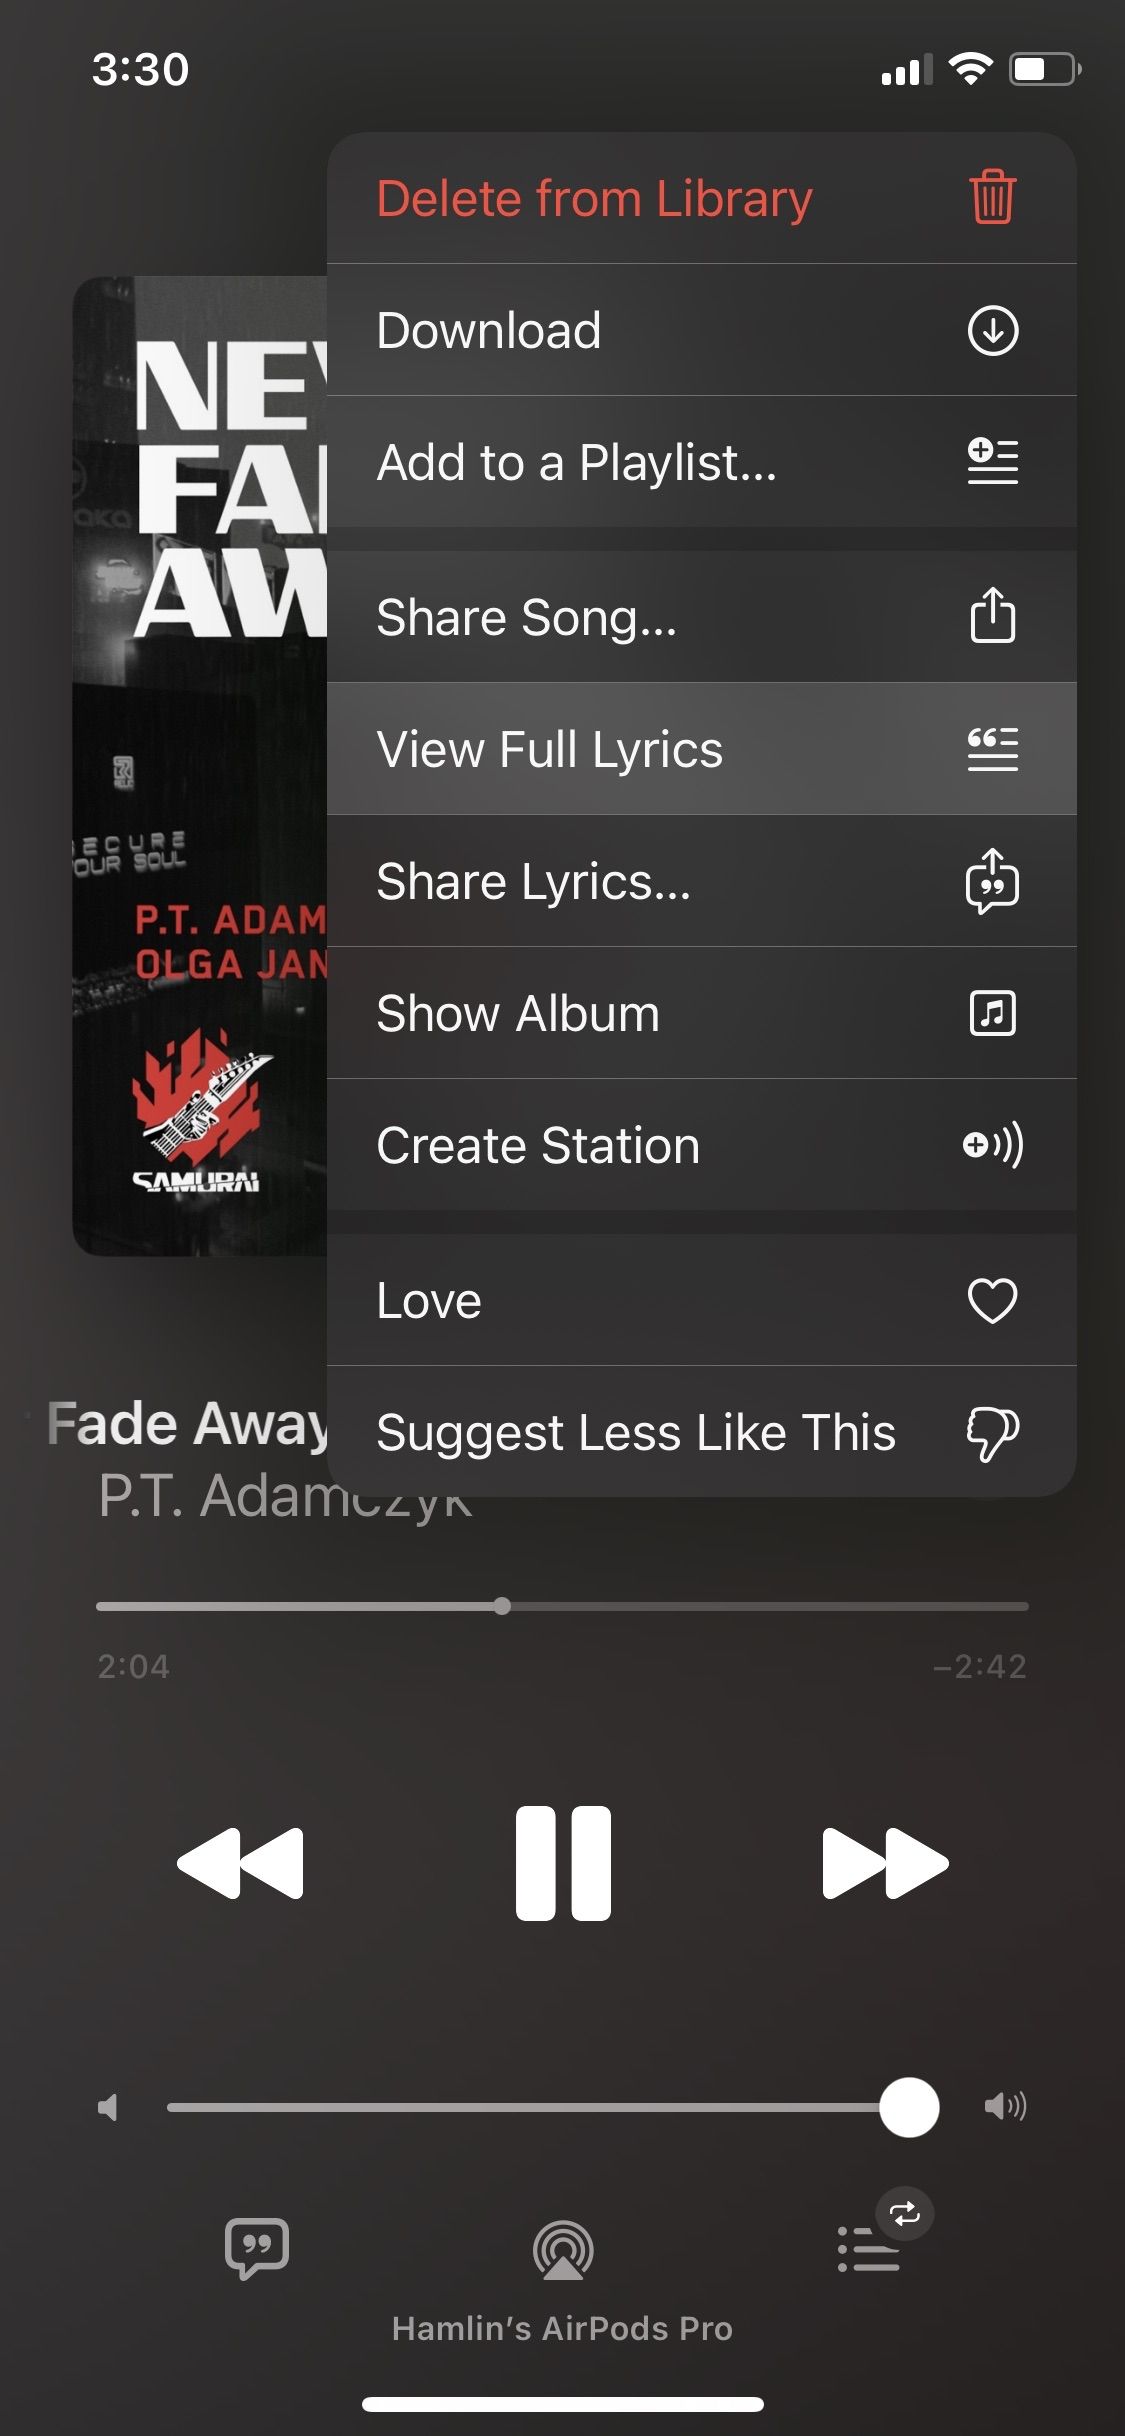 Apple Music context menu in iOS